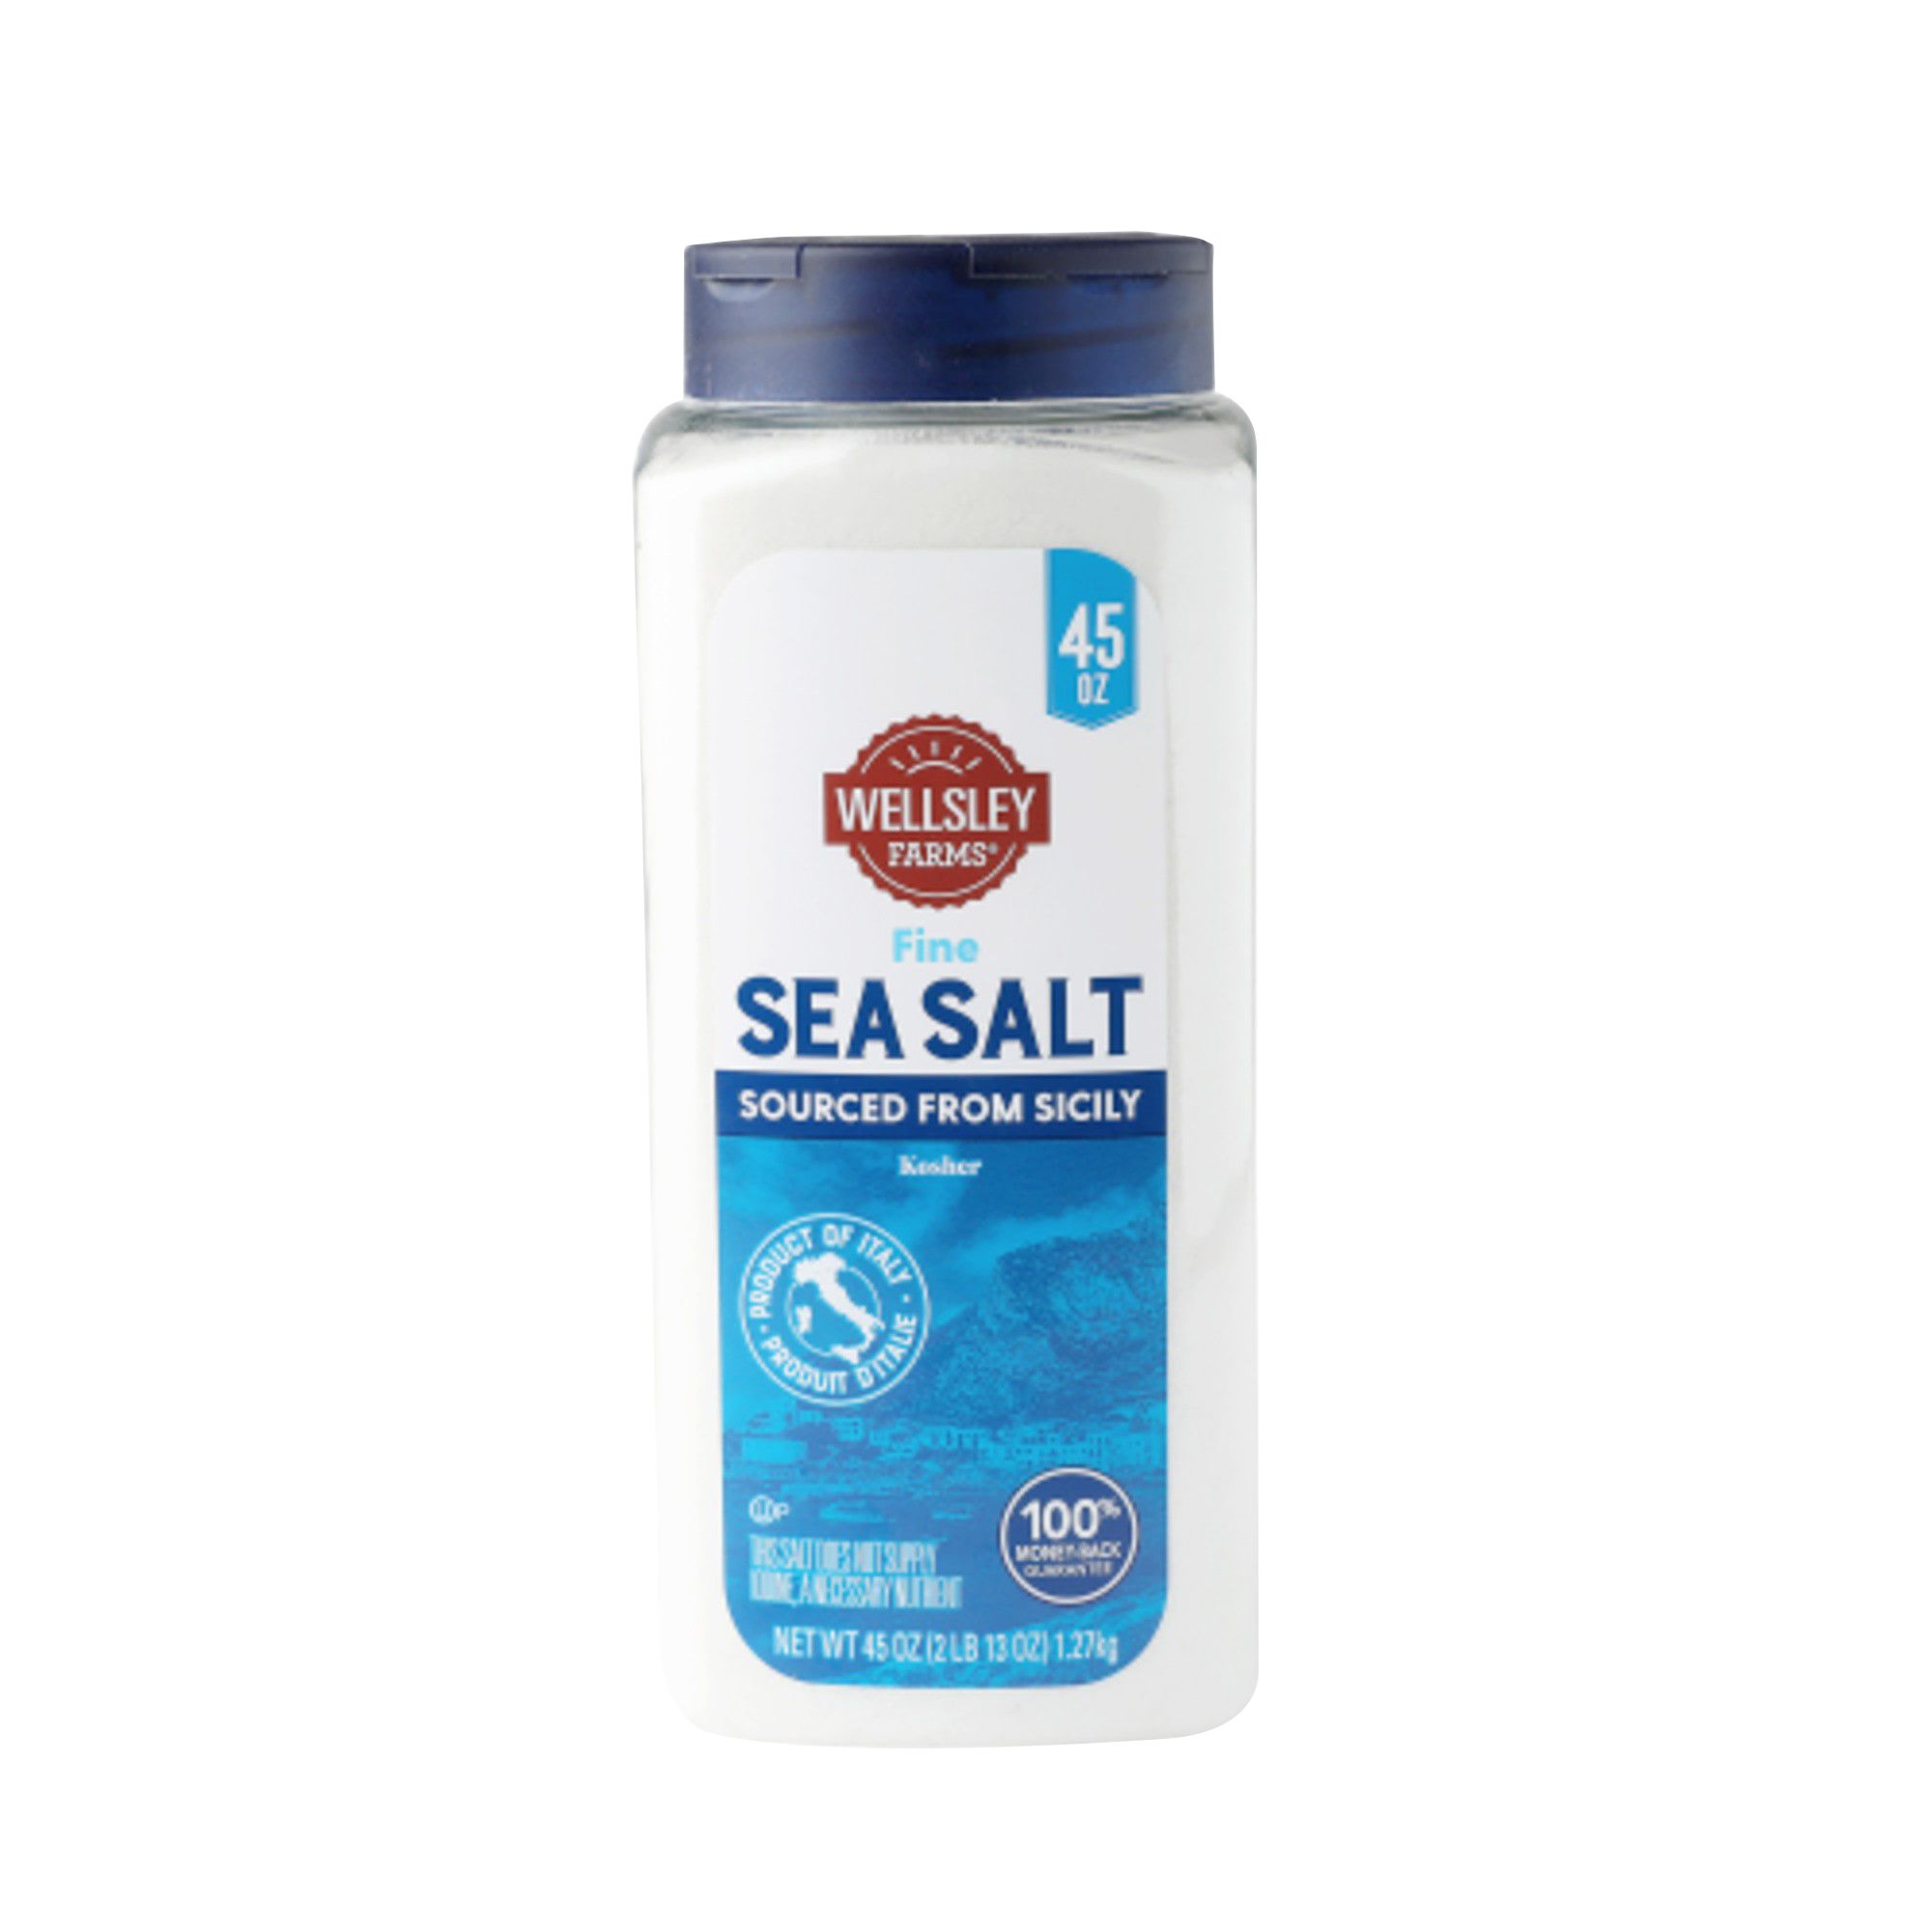 Wellsley Farms Fine Sea Salt, 45 oz. | BJ\'s Wholesale Club